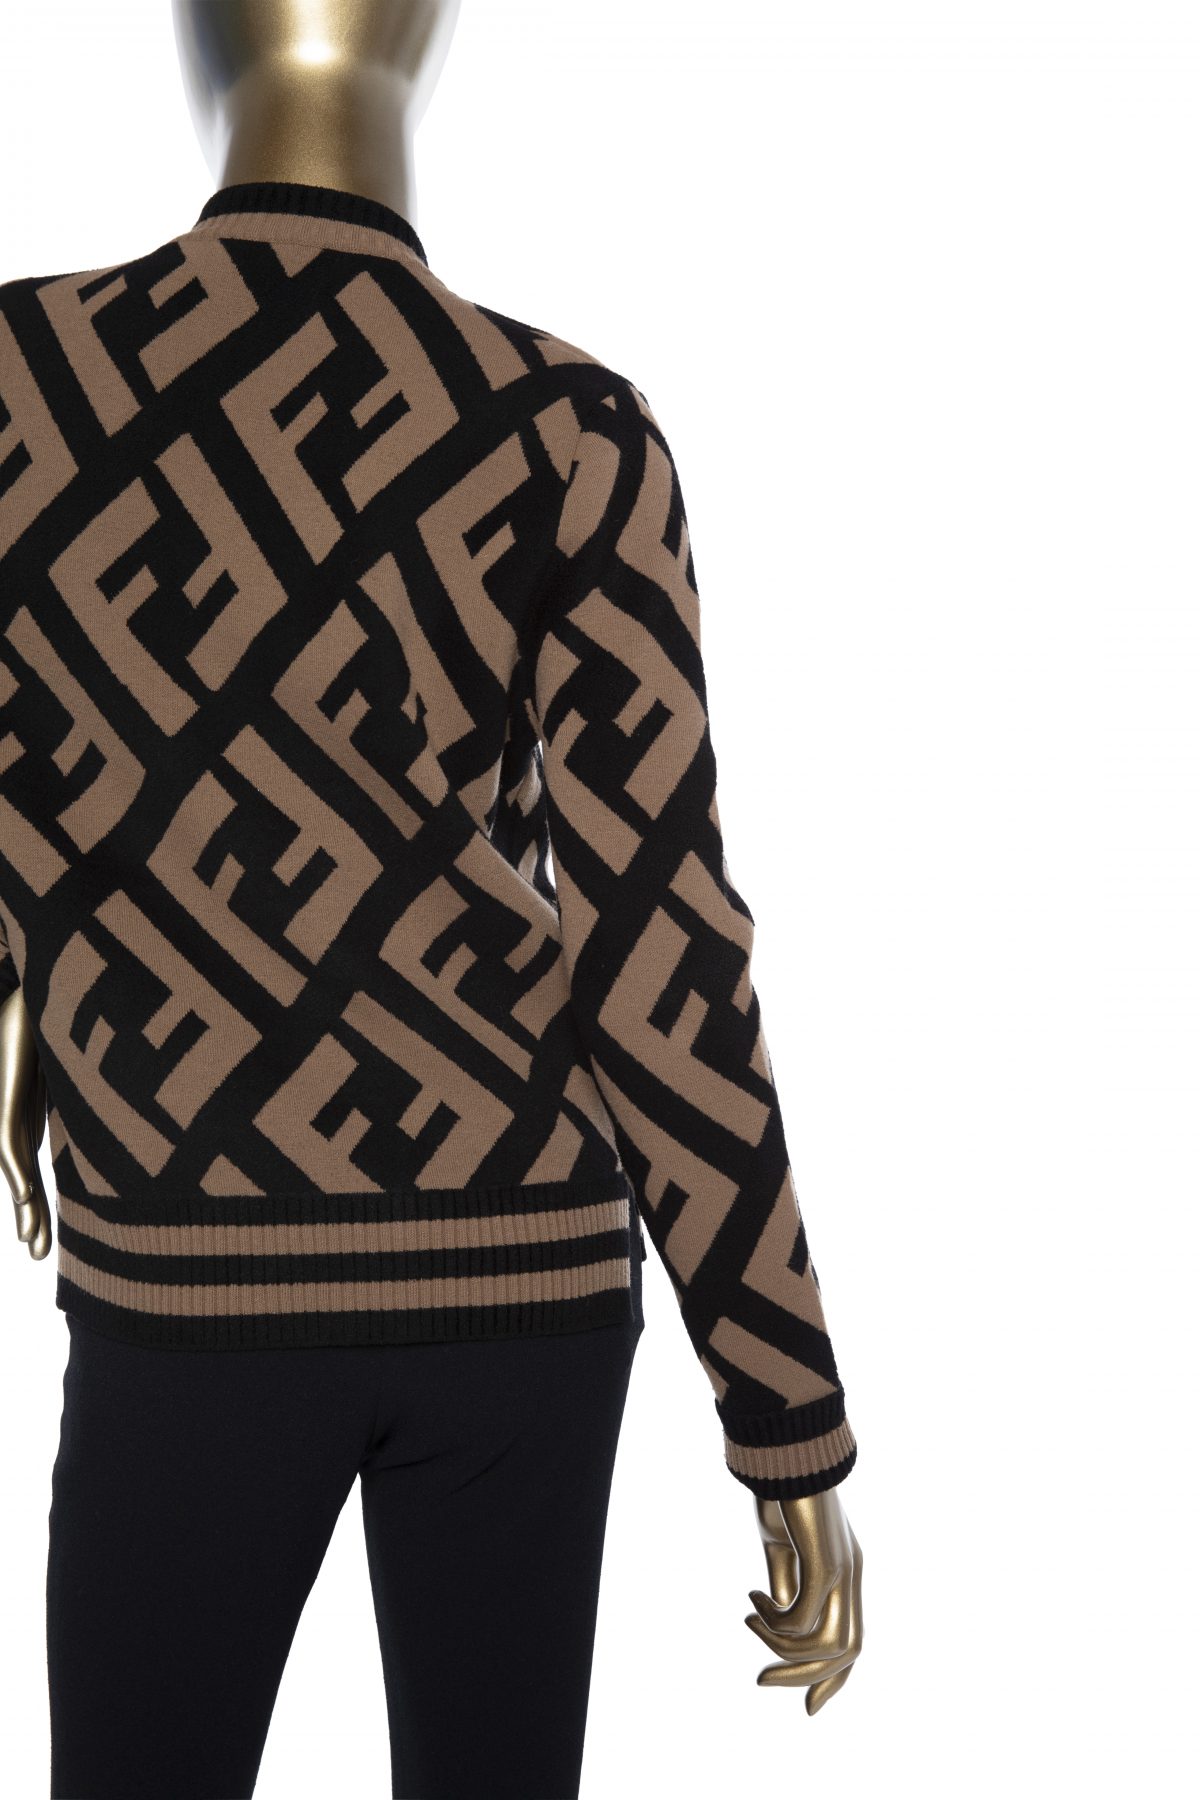 FENDI FF logo knit sweater - Janet Mandell